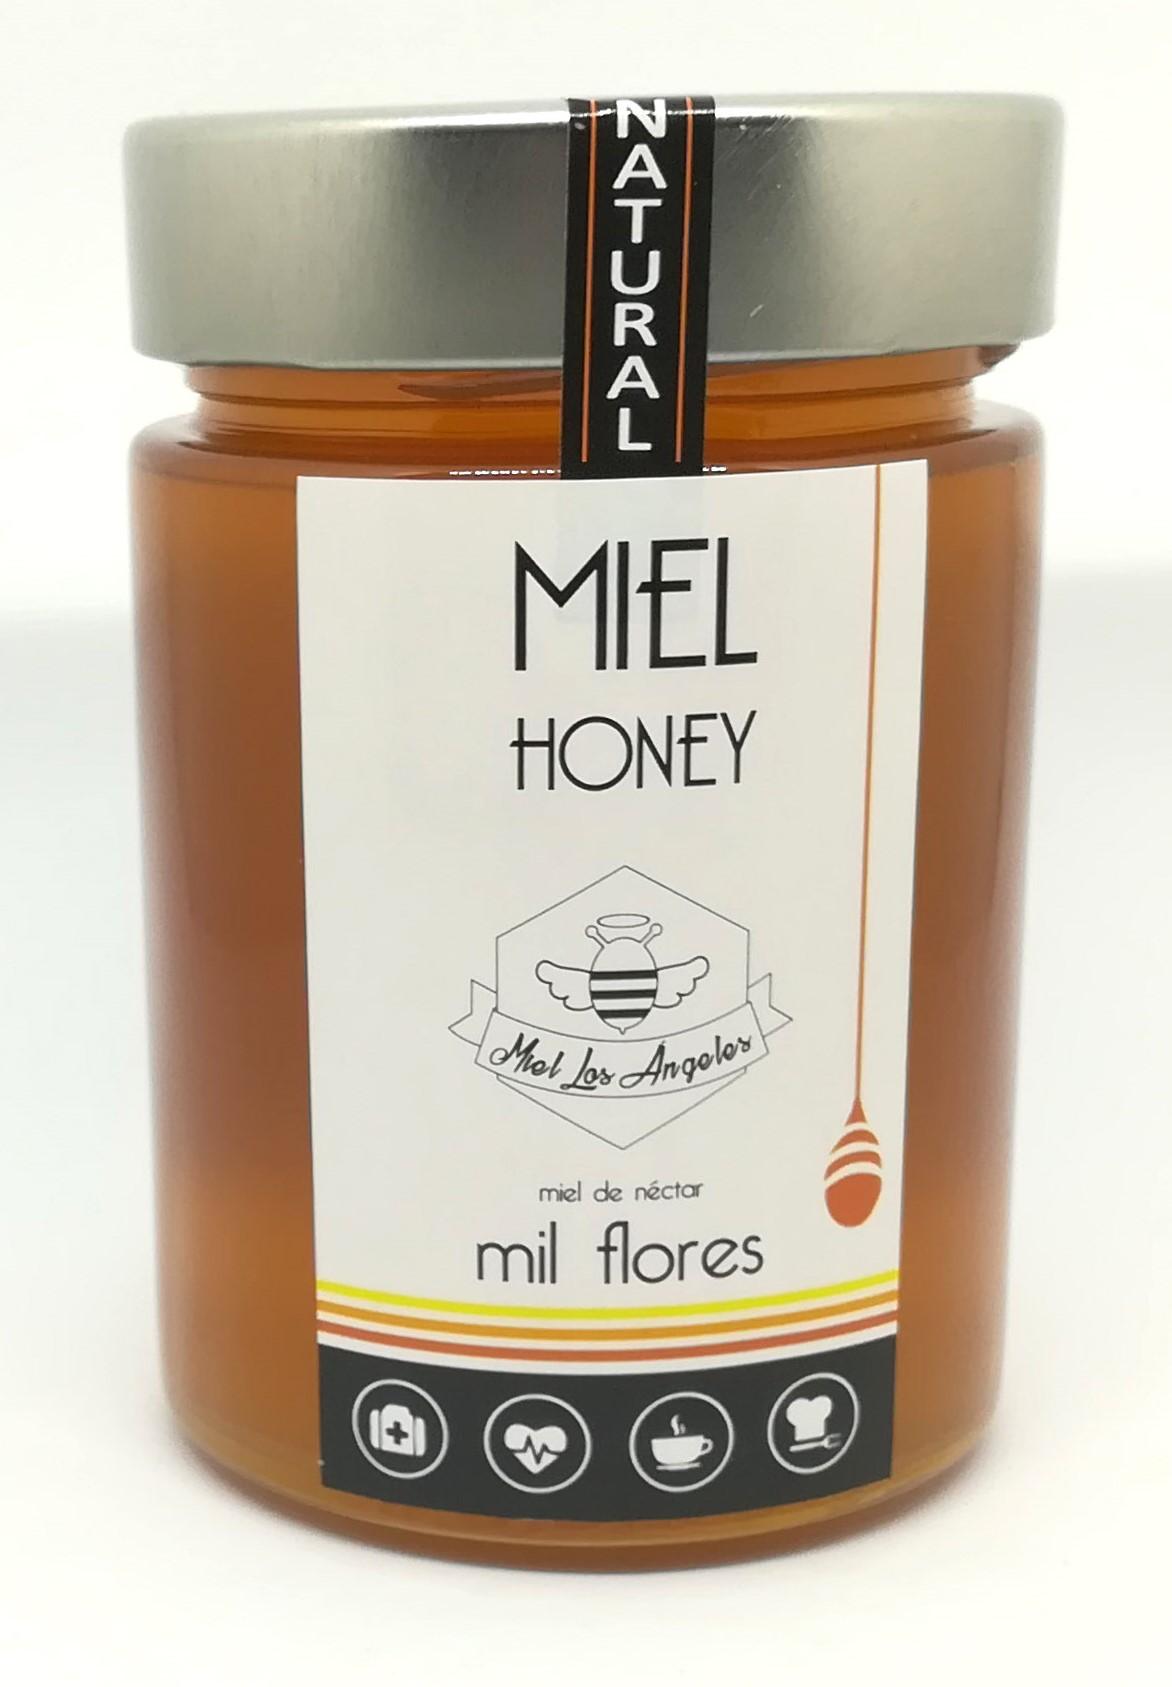 Miel Milflores "Los Ángeles" Gourmet.